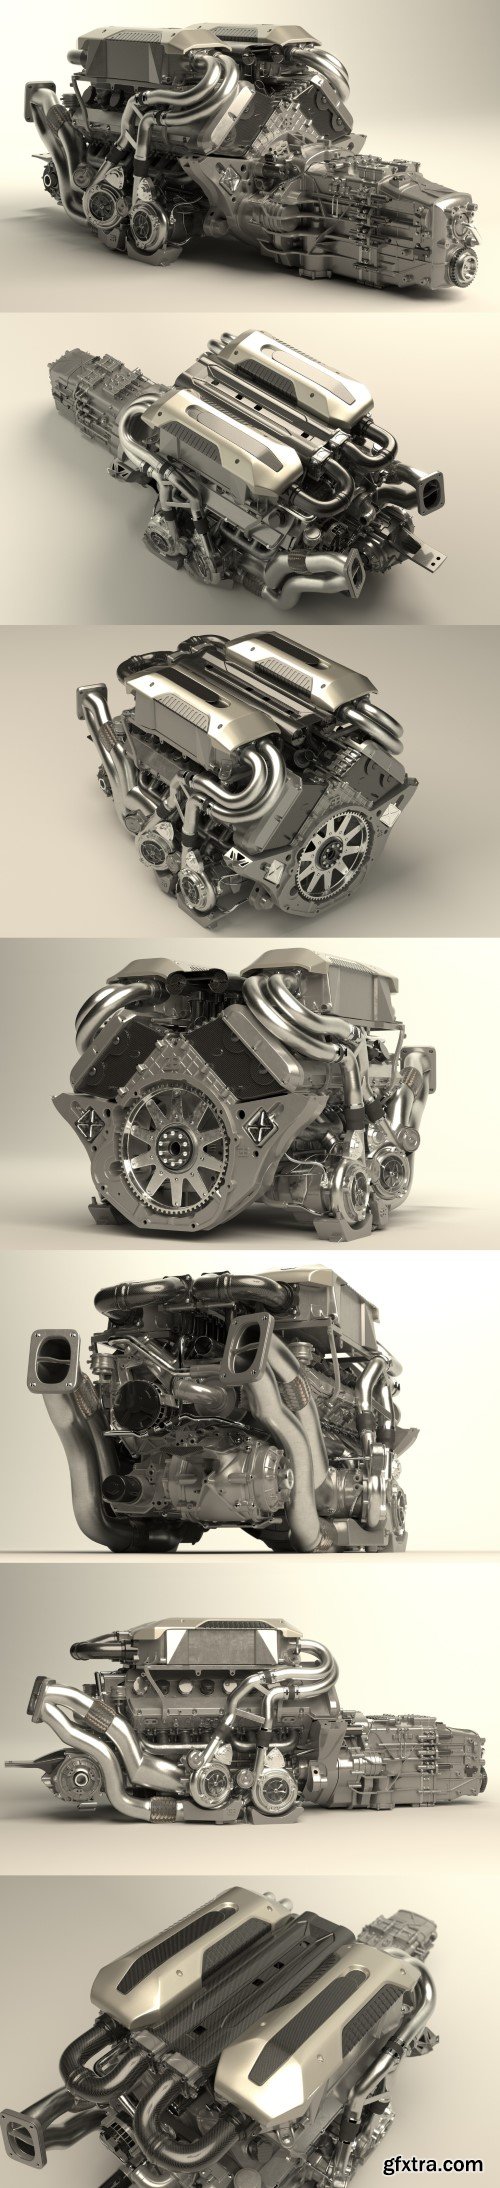 Bugatti W16 Engine (Chiron) 3D MODEL